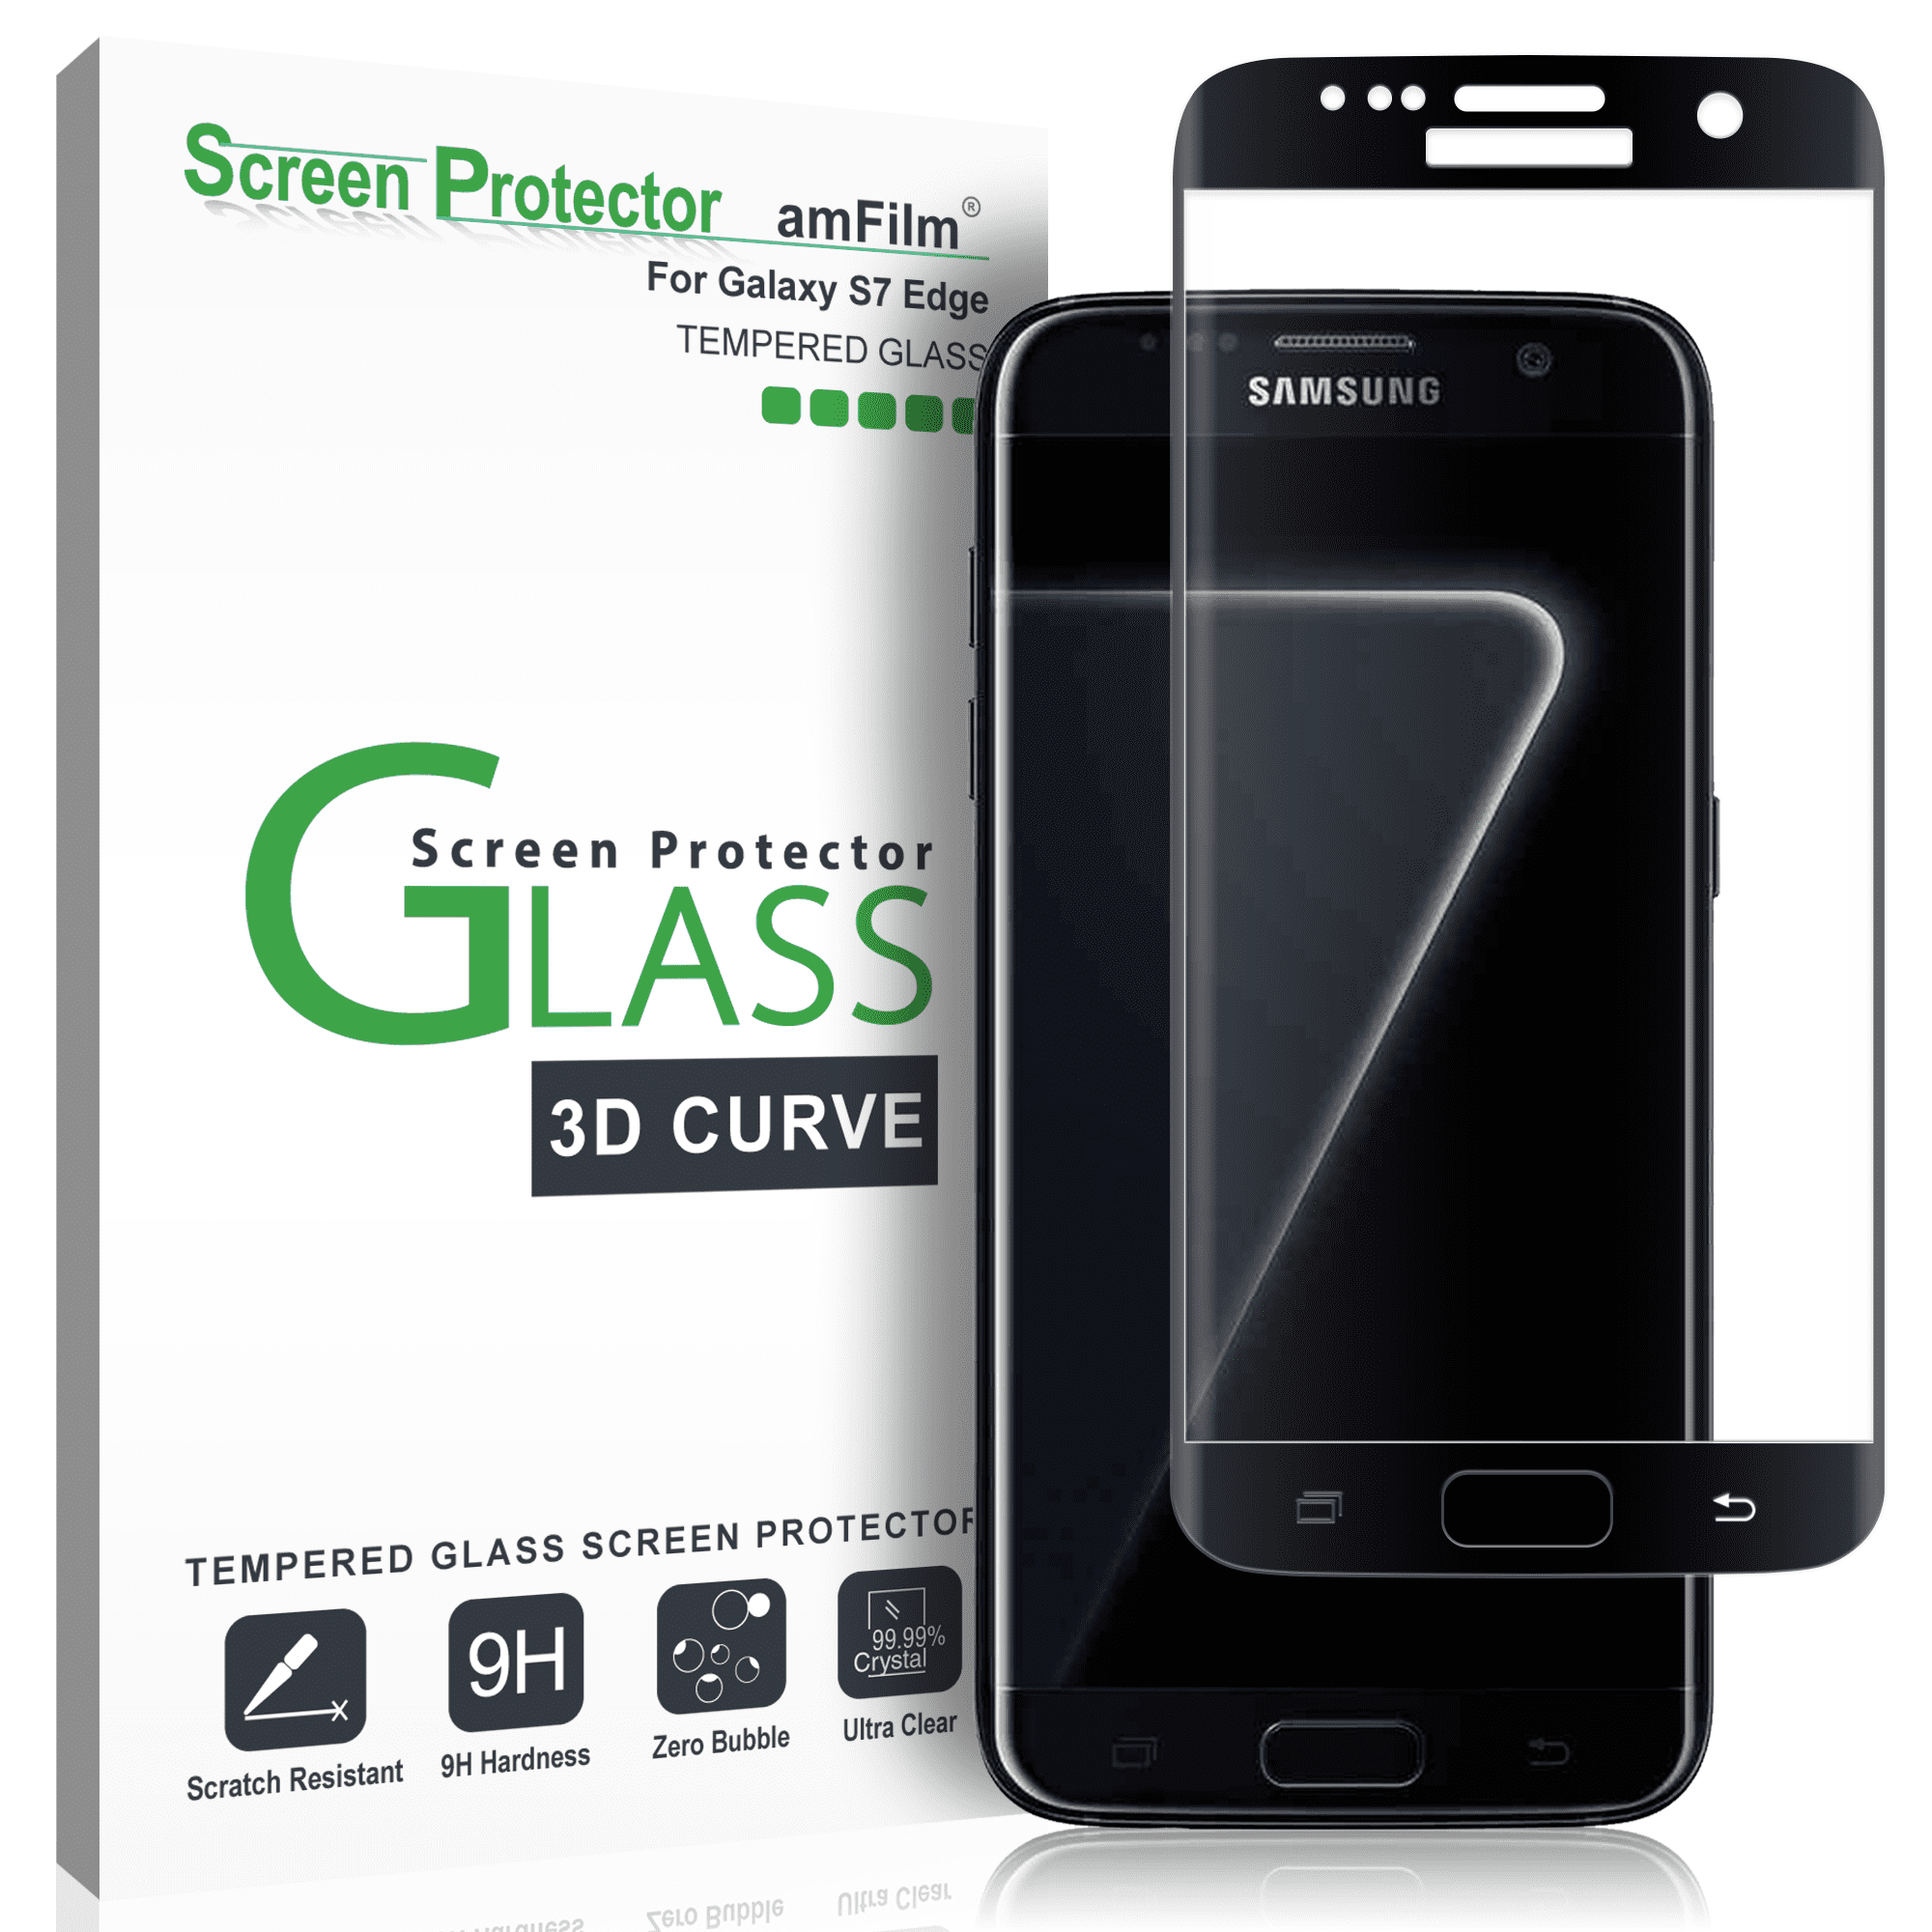 Emuleren Verlengen Pijler amFilm Screen Protector for Samsung Galaxy S7 Edge, Full Cover (3D Curved)  Tempered Glass Film with Dot Matix (Black) - Walmart.com